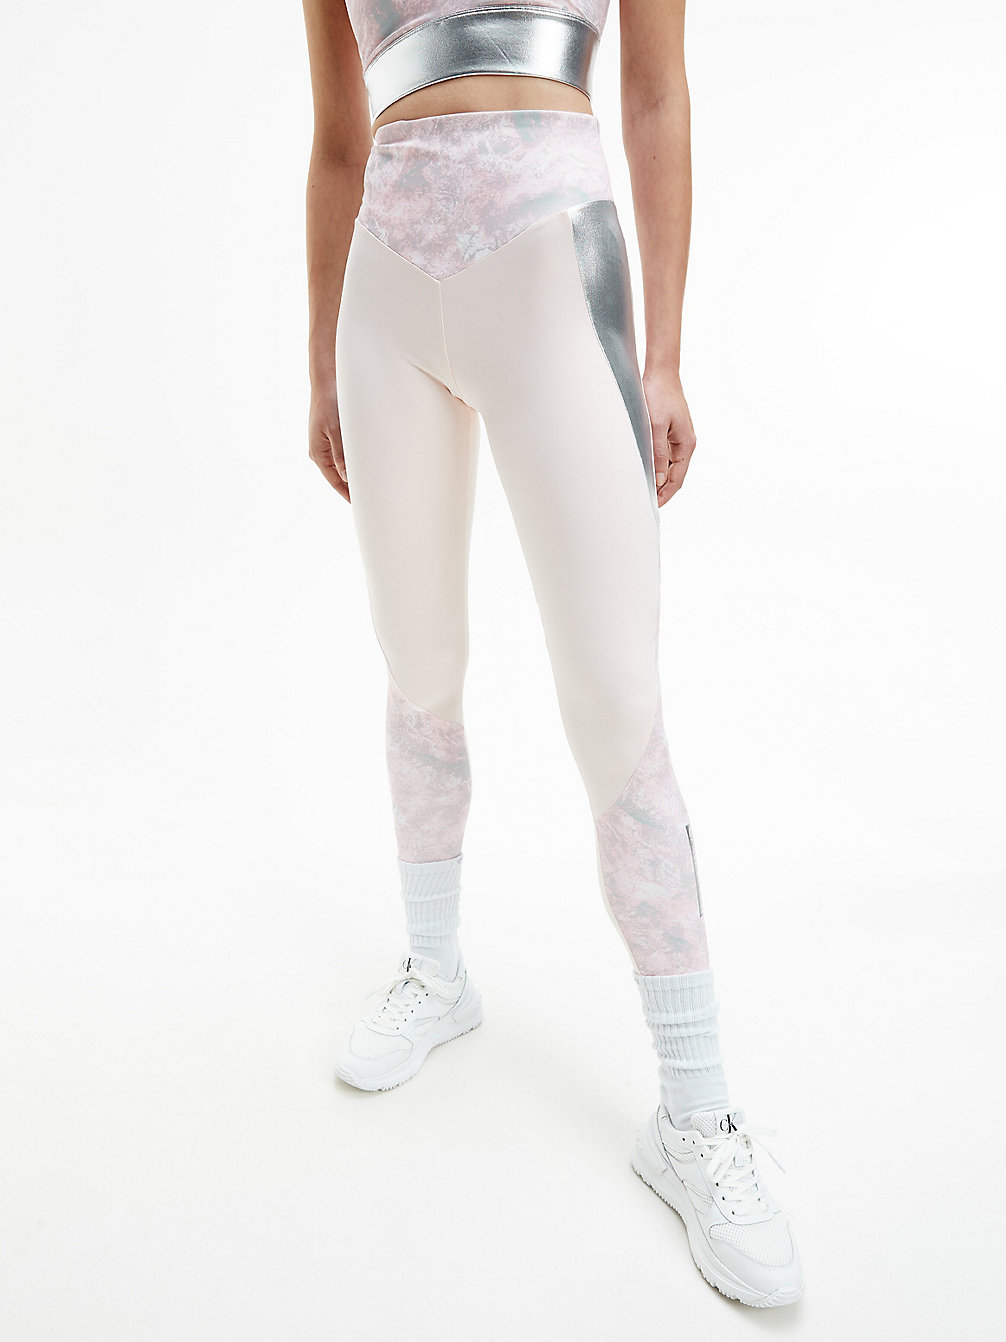 ROSE QUARTZ MOON PRINT Printed Gym Leggings undefined women Calvin Klein